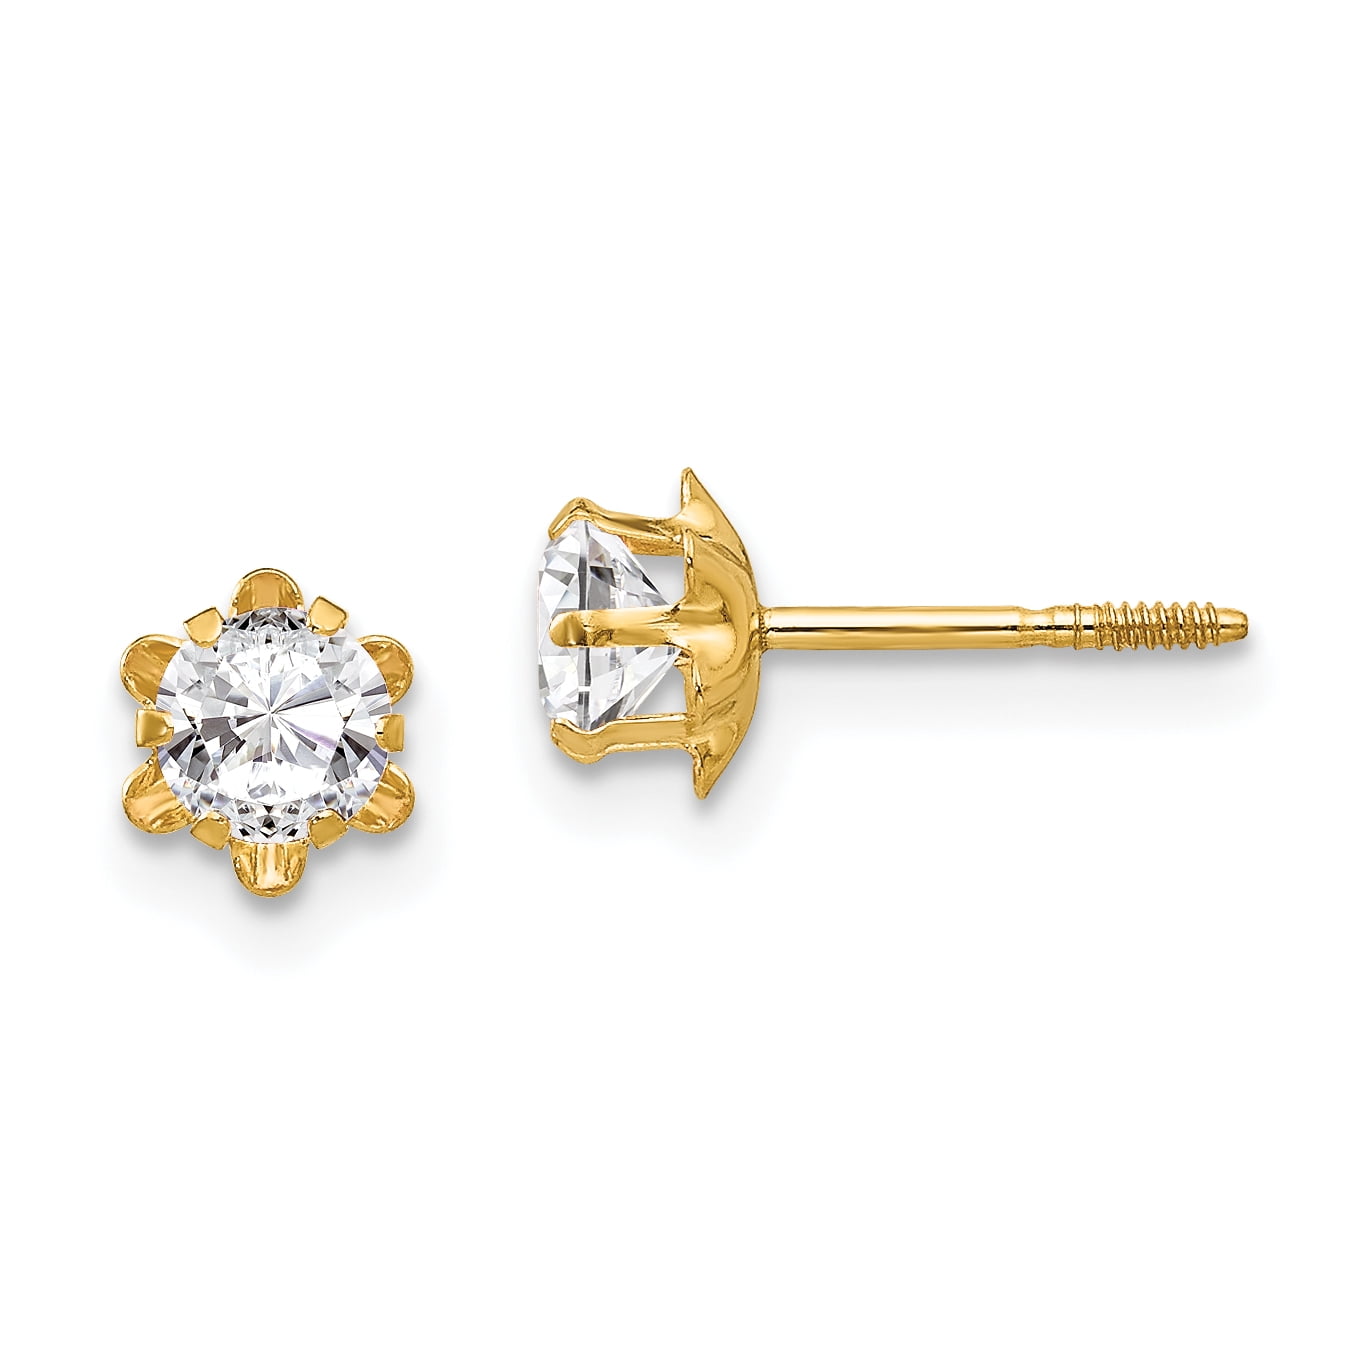 14K Yellow Gold Jewelry J-Hoop Earrings Solid 4 mm 8 mm Madi K CZ Childrens Three Stone Post Earrings